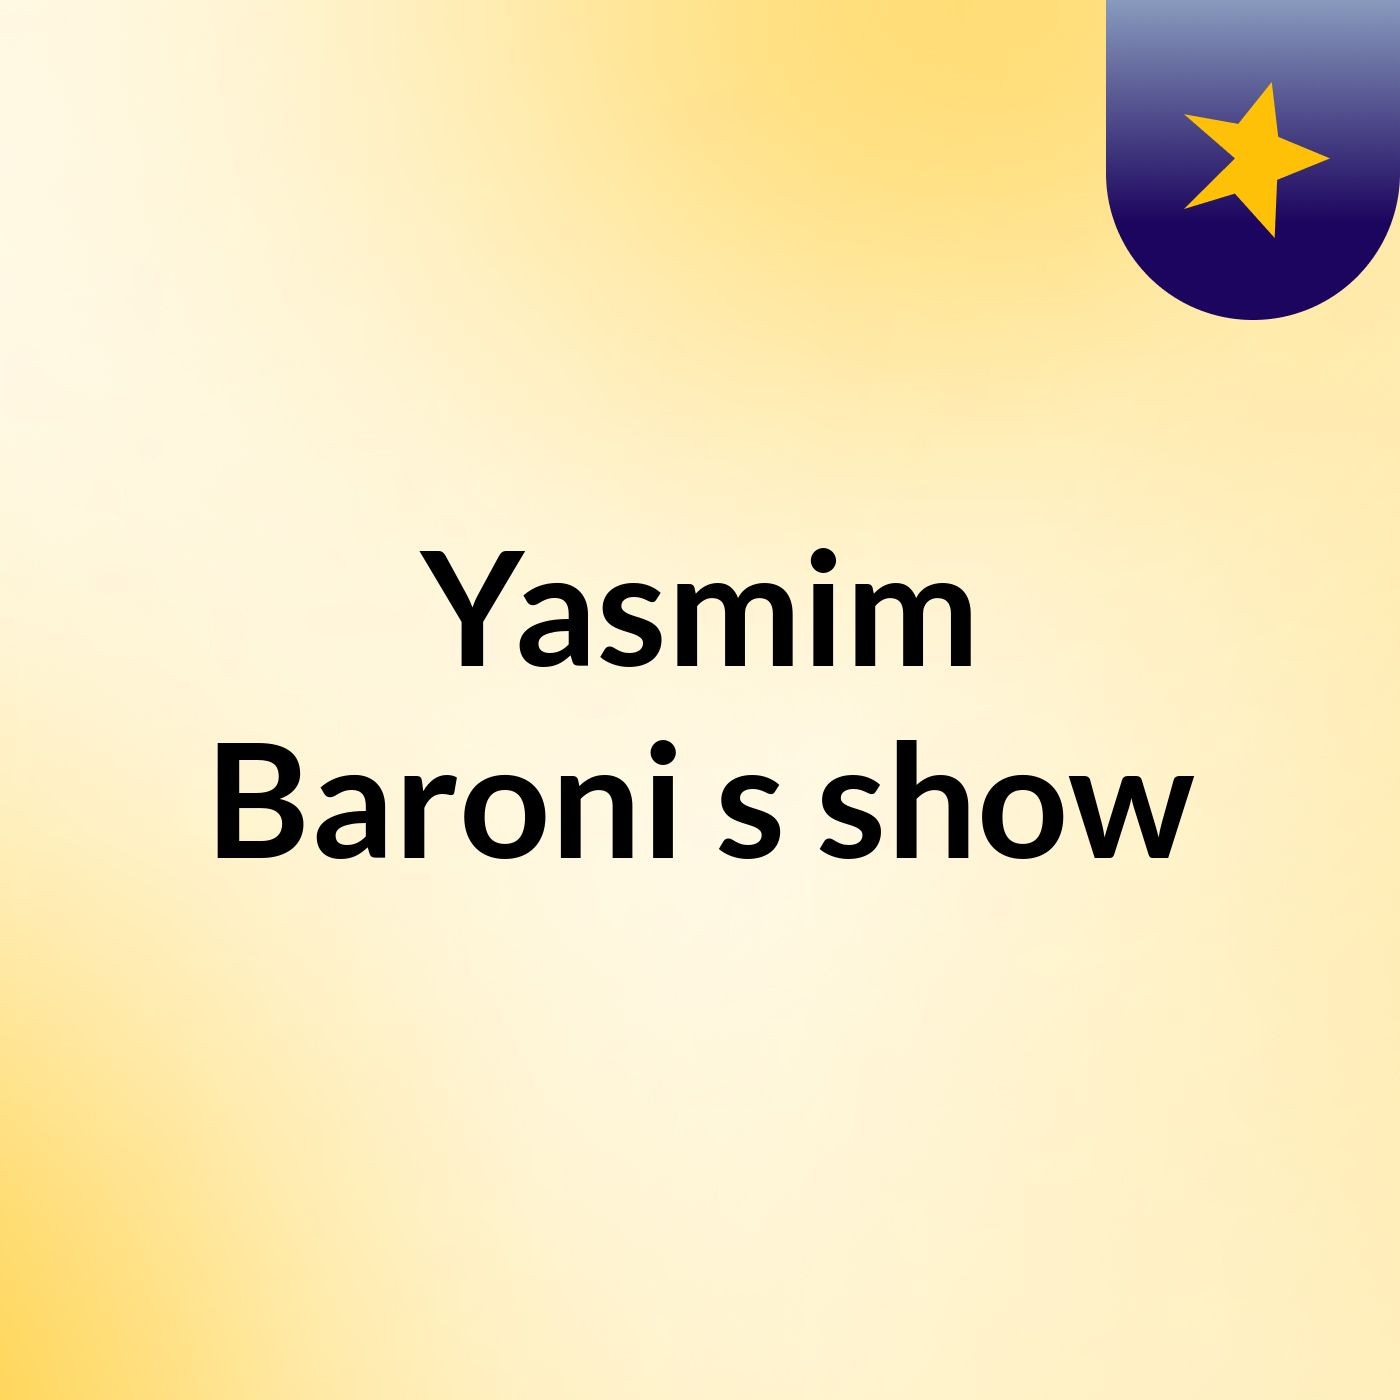 Yasmim Baroni's show